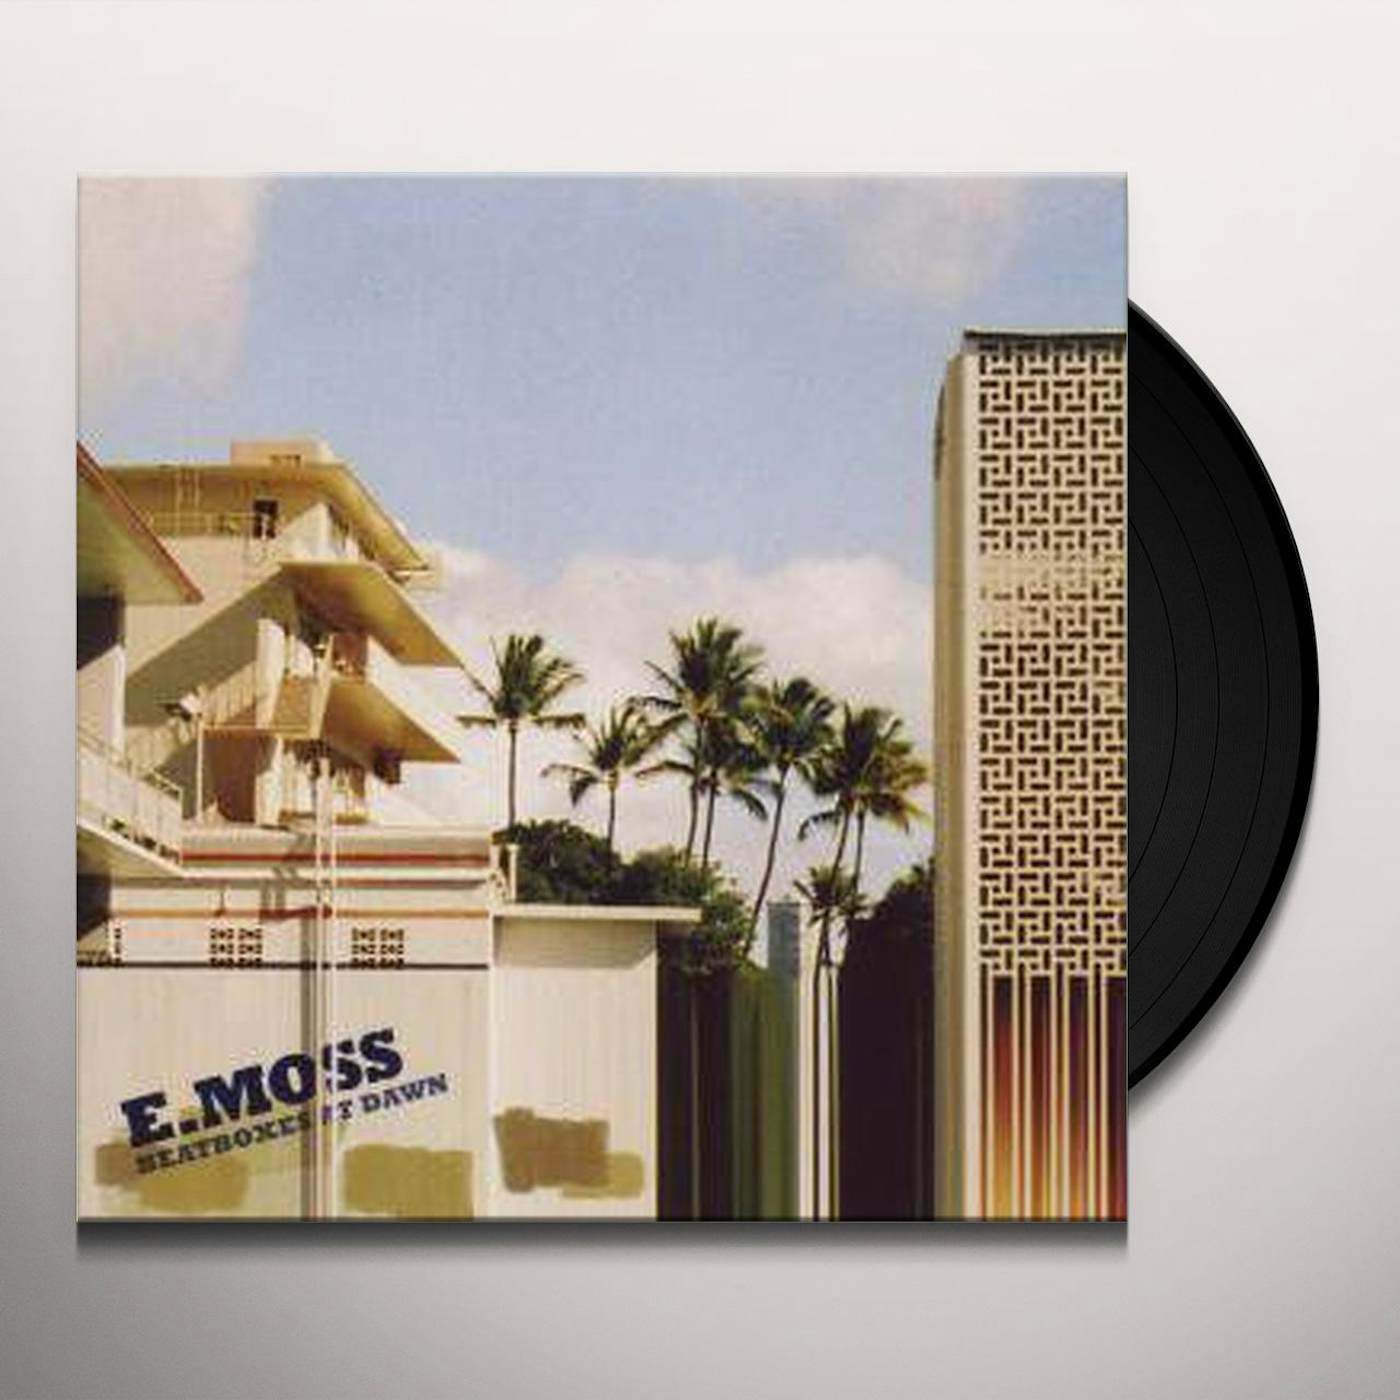 E Moss BEATBOX AT DAWN Vinyl Record